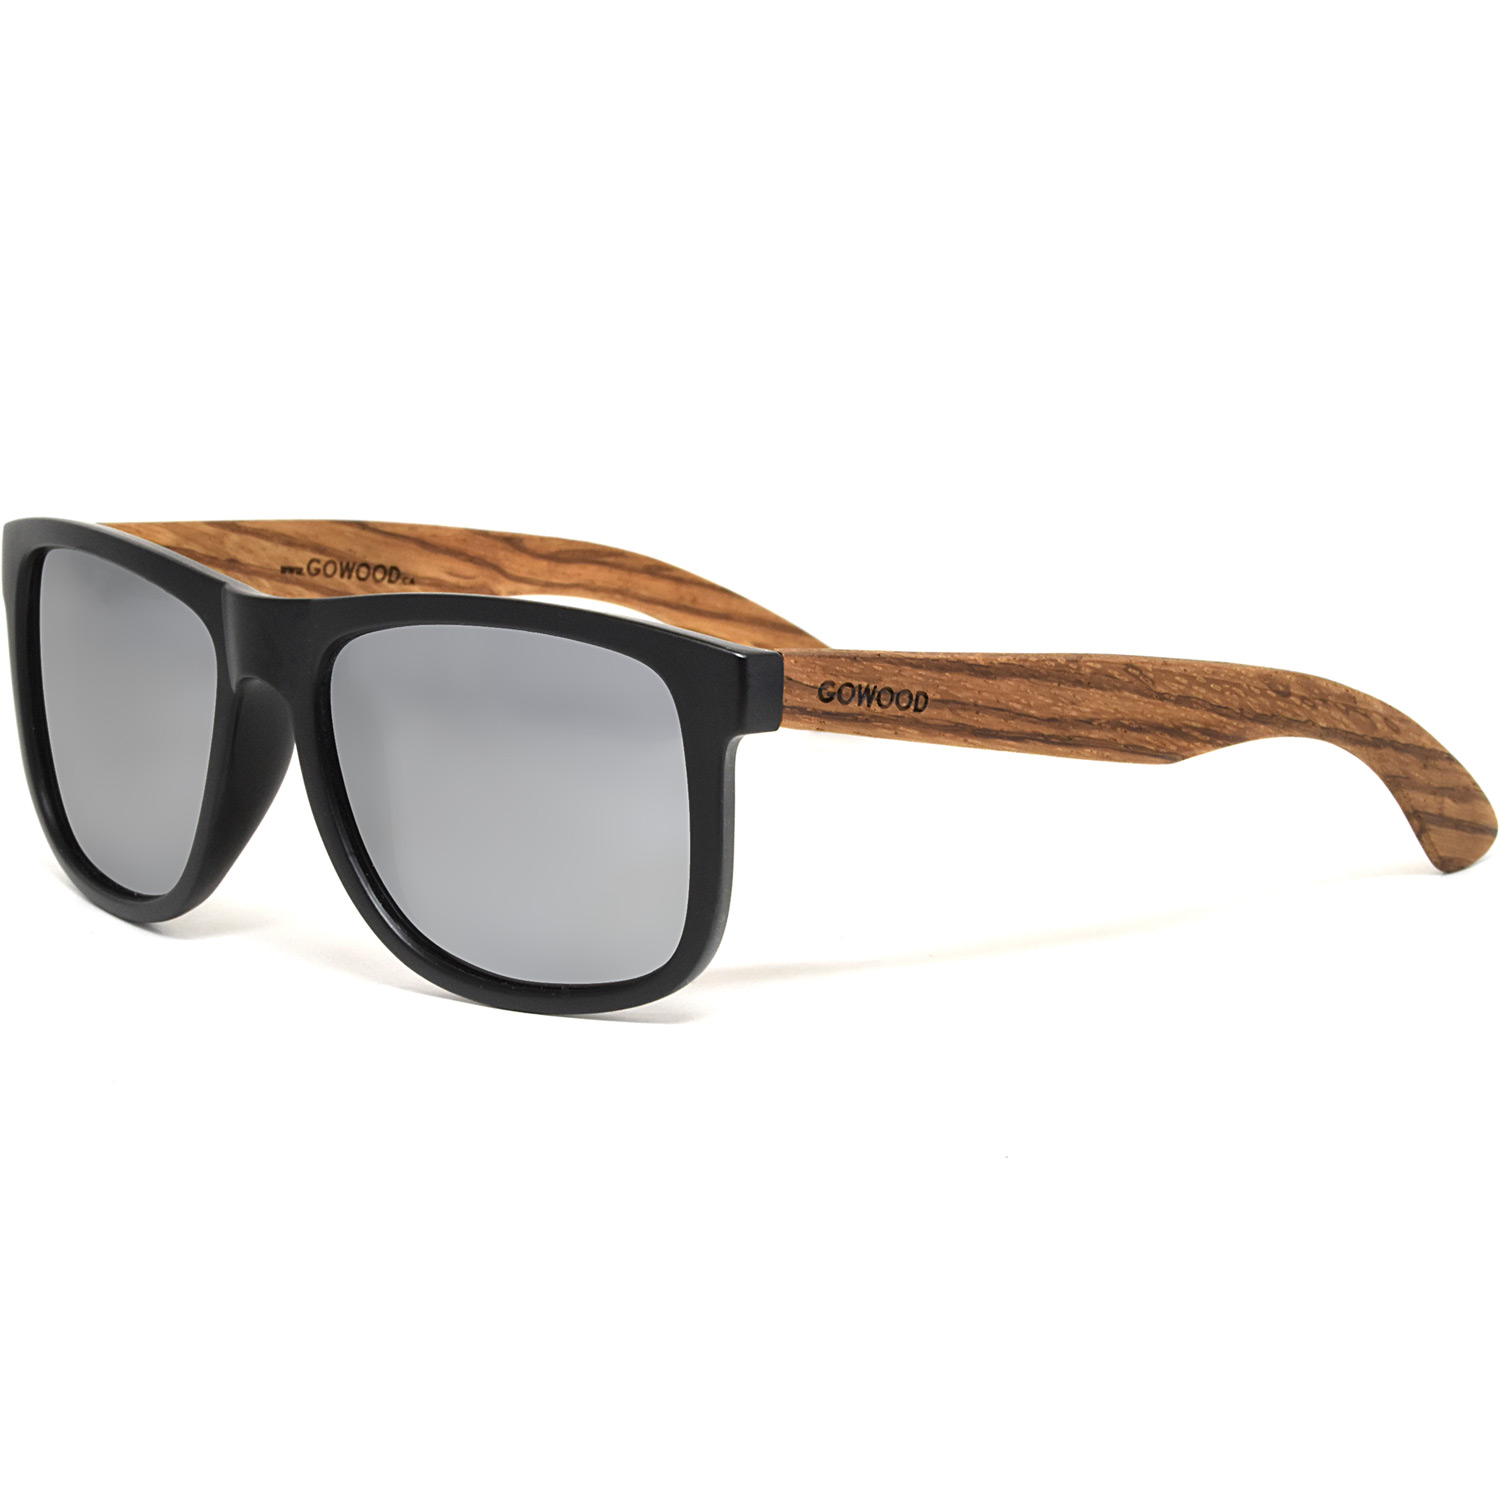 Square zebra wood sunglasses silver mirrored polarized lenses left